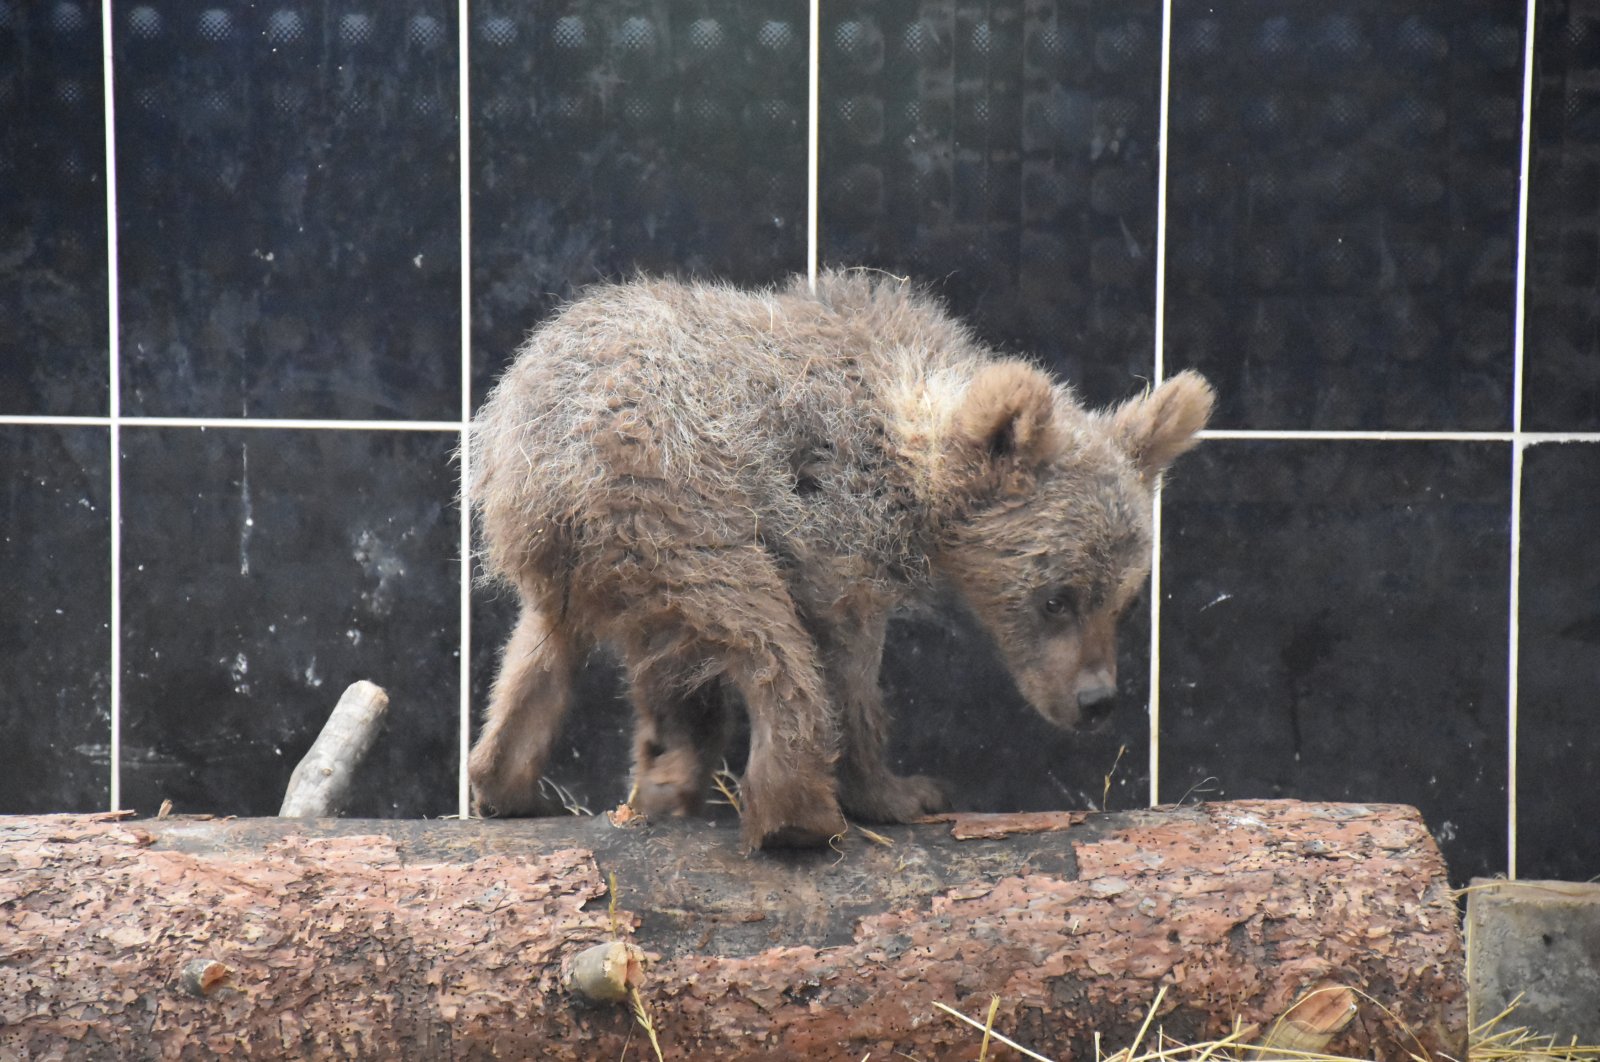 Turkish veterinarian’s care brings bear cub ‘Cindy’ back to health